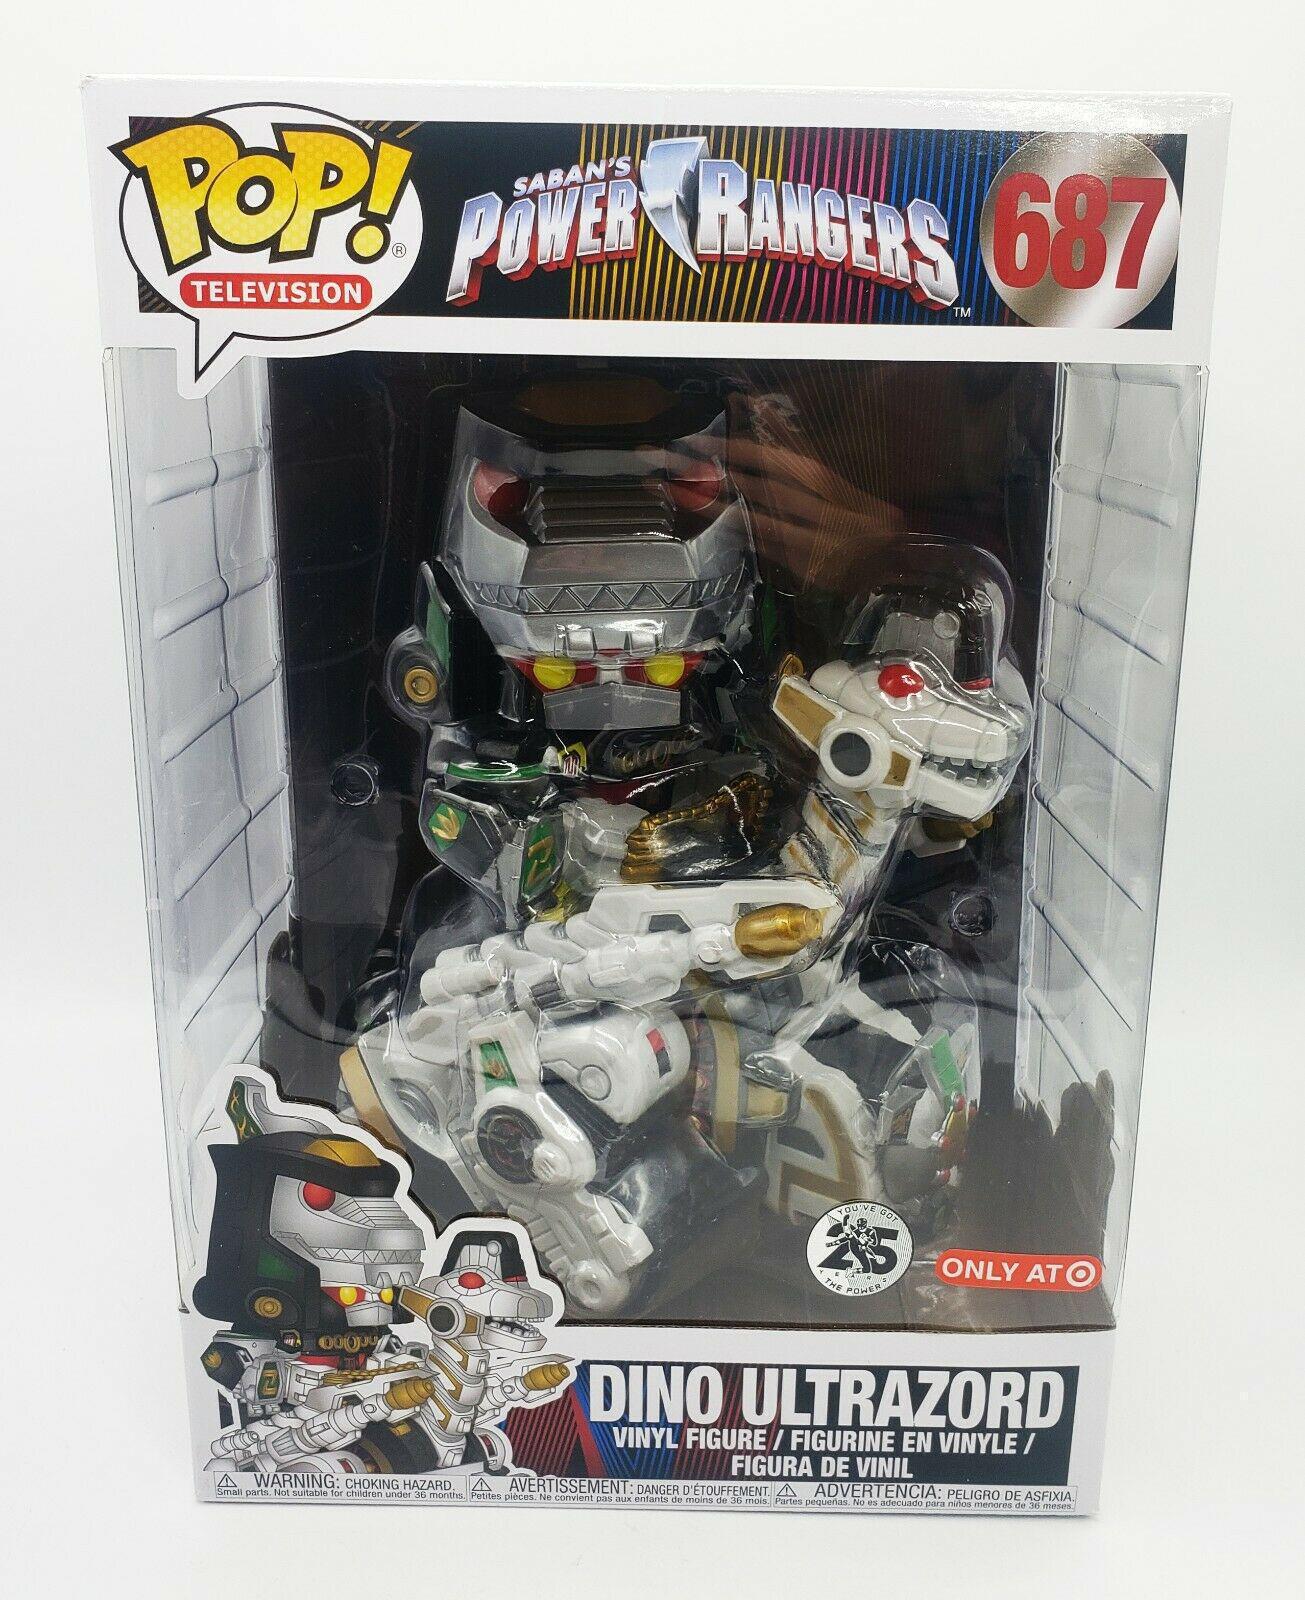 Funko Pop Target Dino Ultrazord 10 Inch Vinyl Figure 687 Power Rangers for sale online